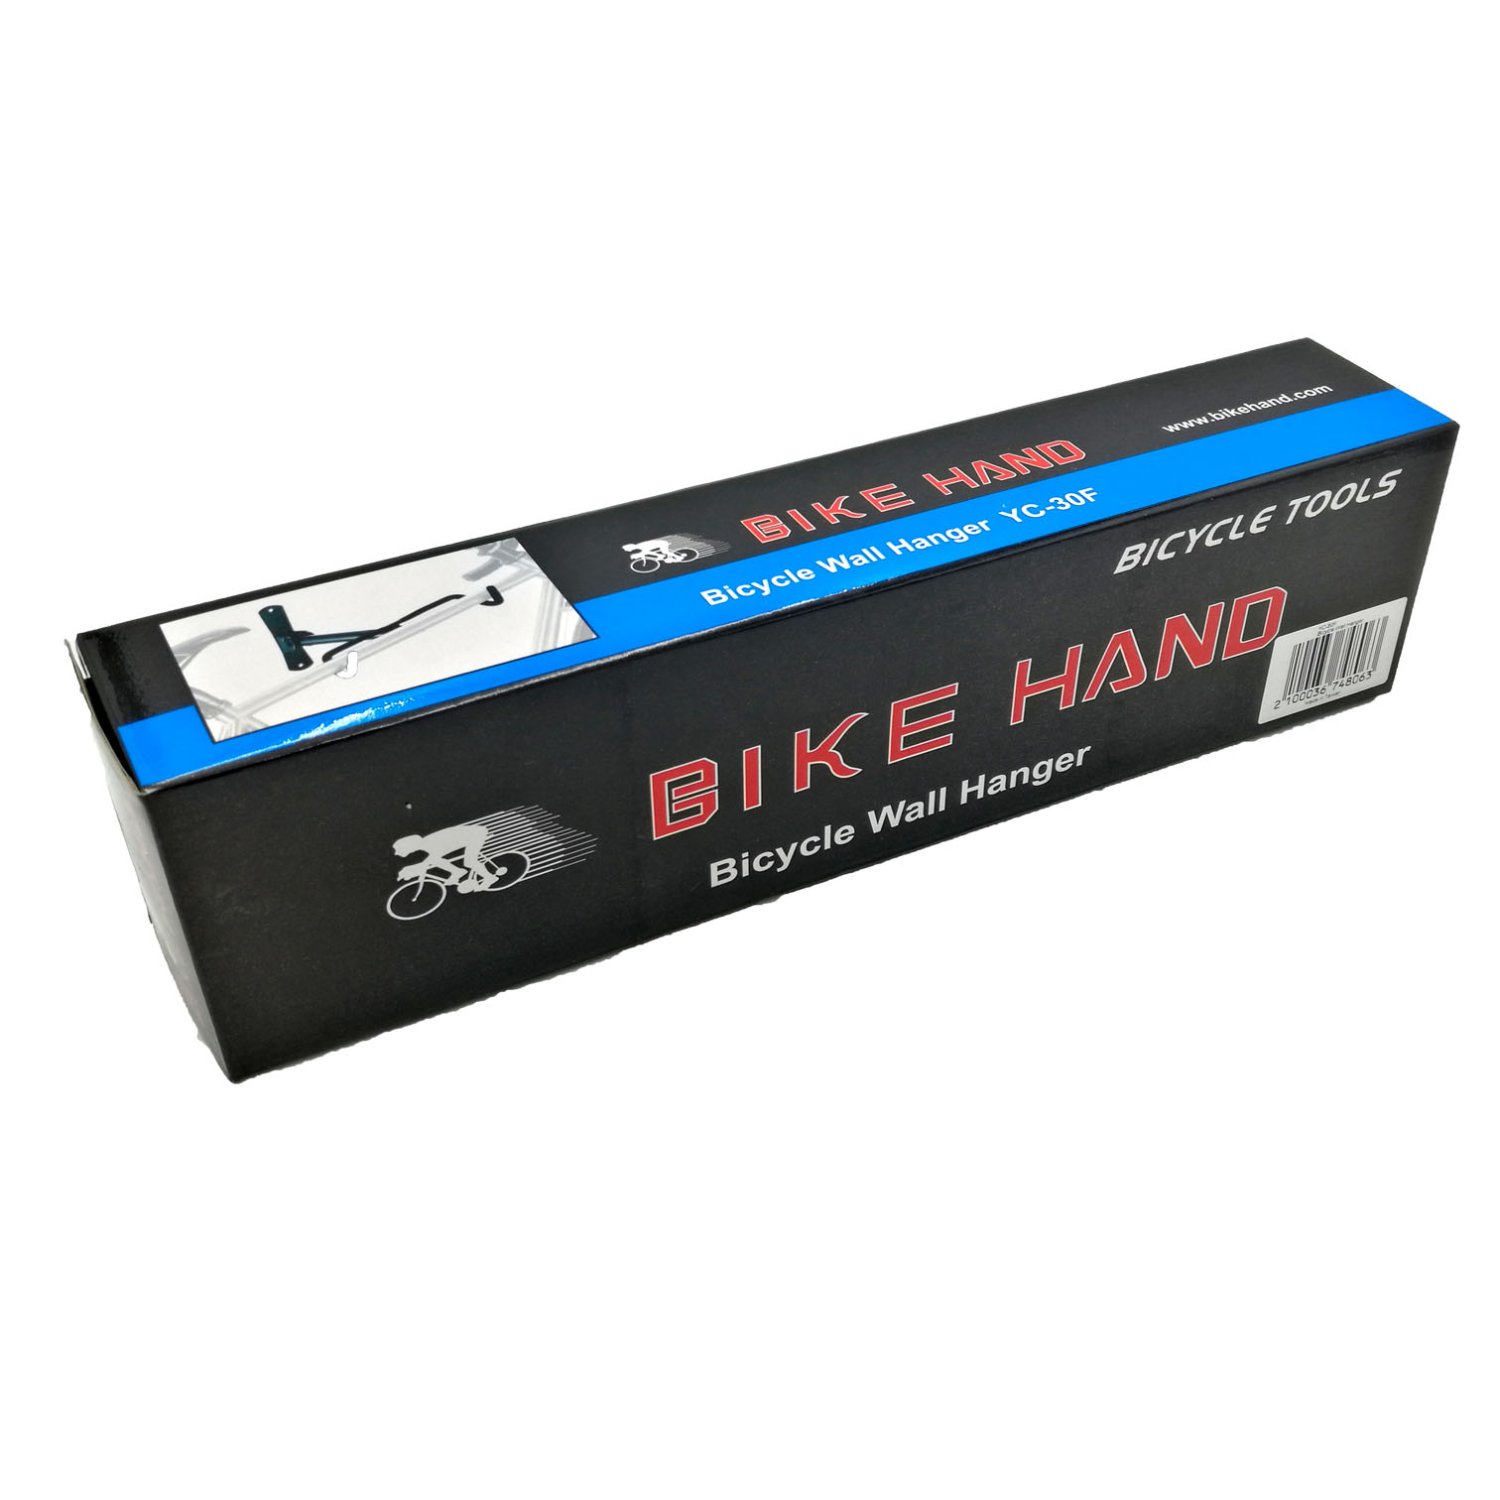 Кронштейн для хранения велосипеда Bike Hand, настенный, Black, YC-30F УТ-00199069 - фото 3